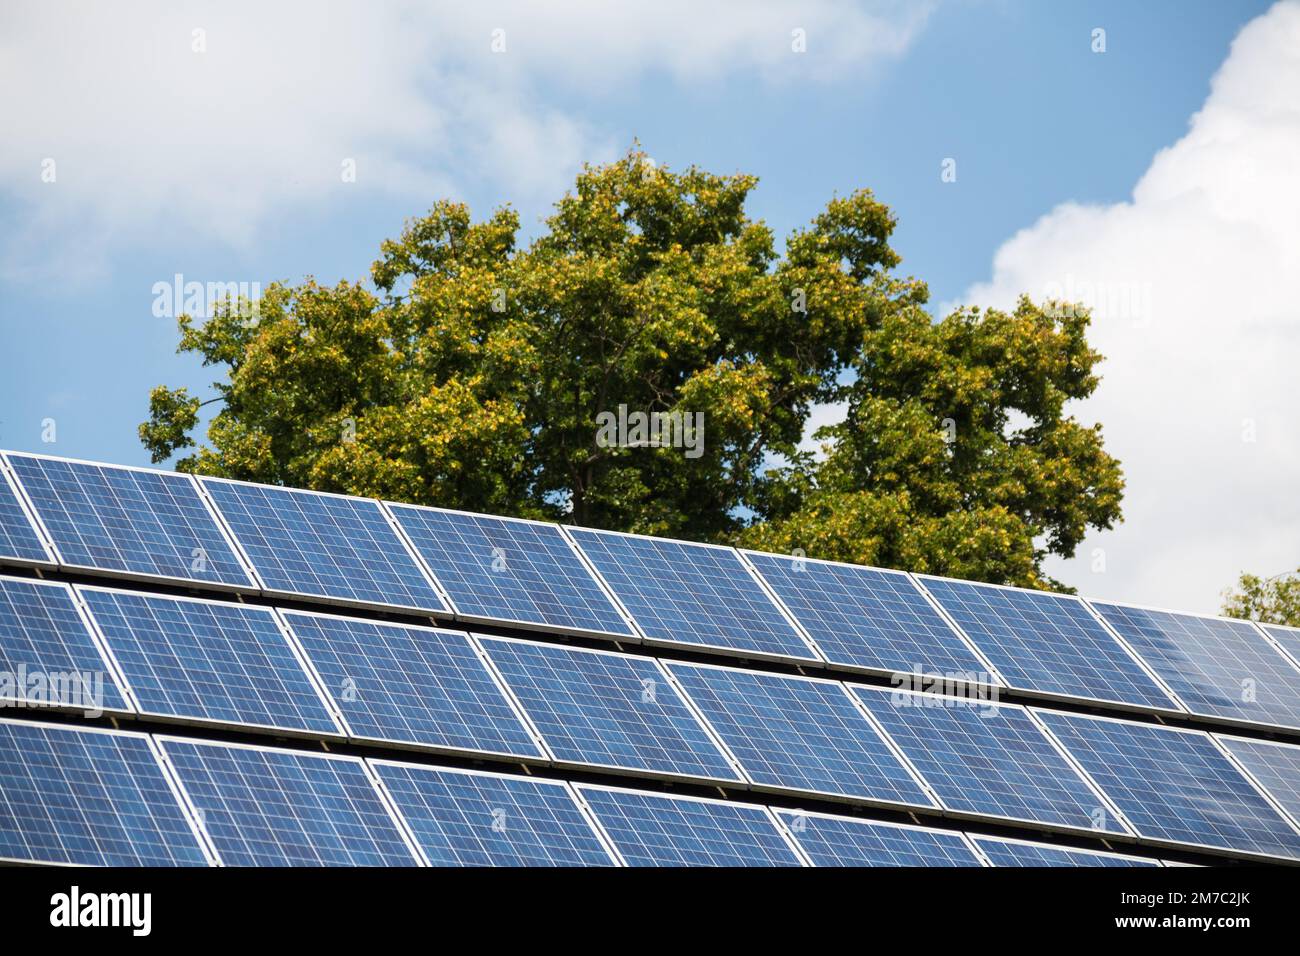 solar panels with tree, Austria Stock Photo